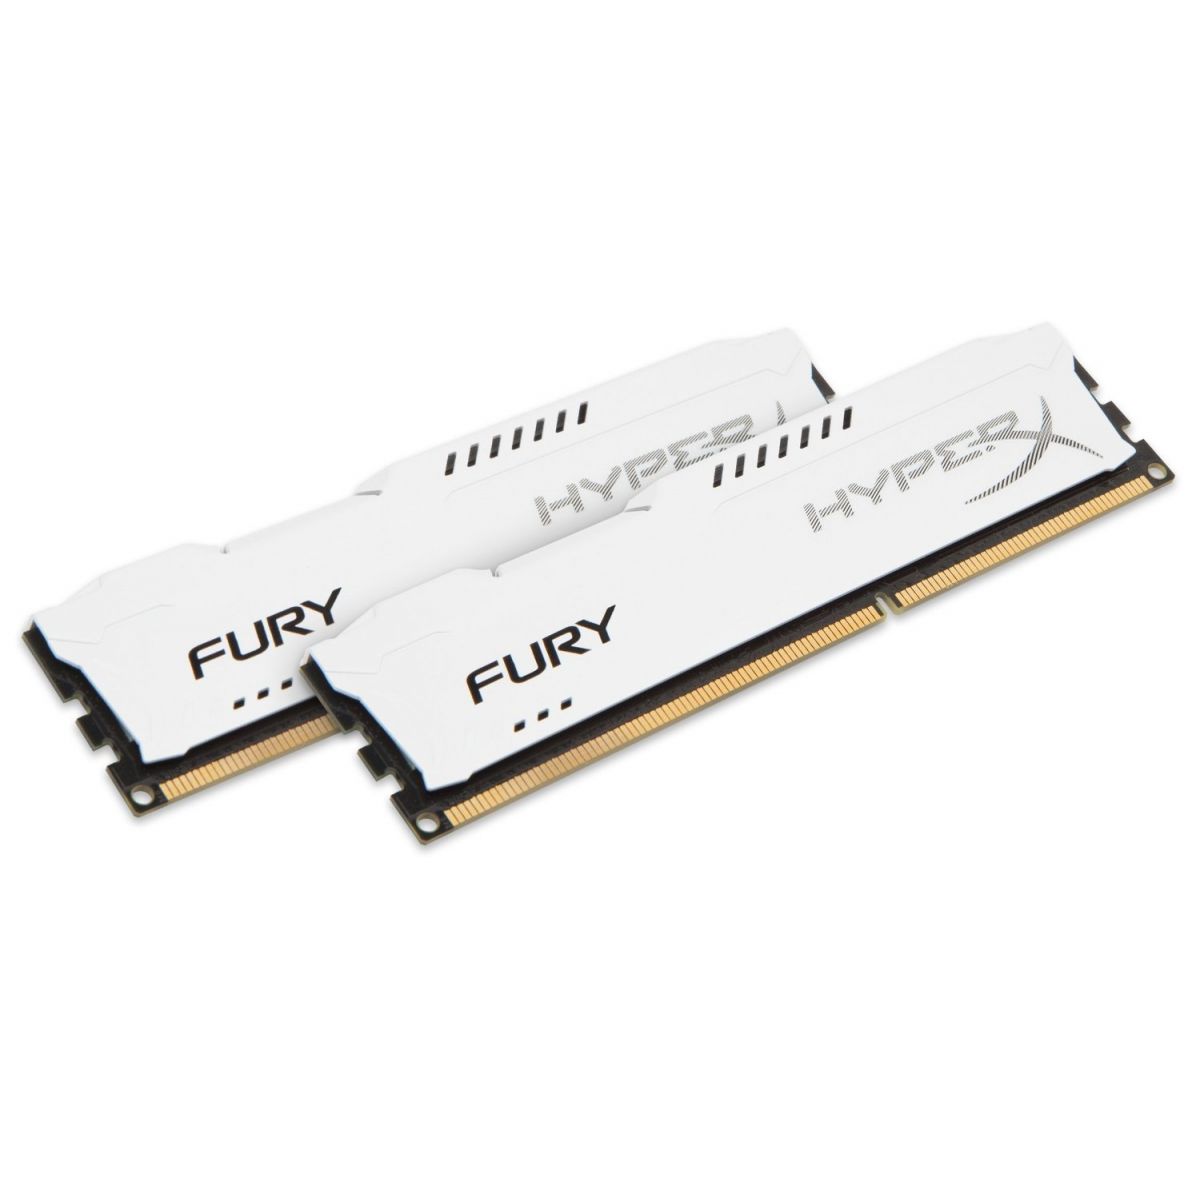 Memória 8GB 1333MHz DDR3 CL9 DIMM (2X4GB) HyperX FURY White Series HX313C9FWK2/8 - Kingston